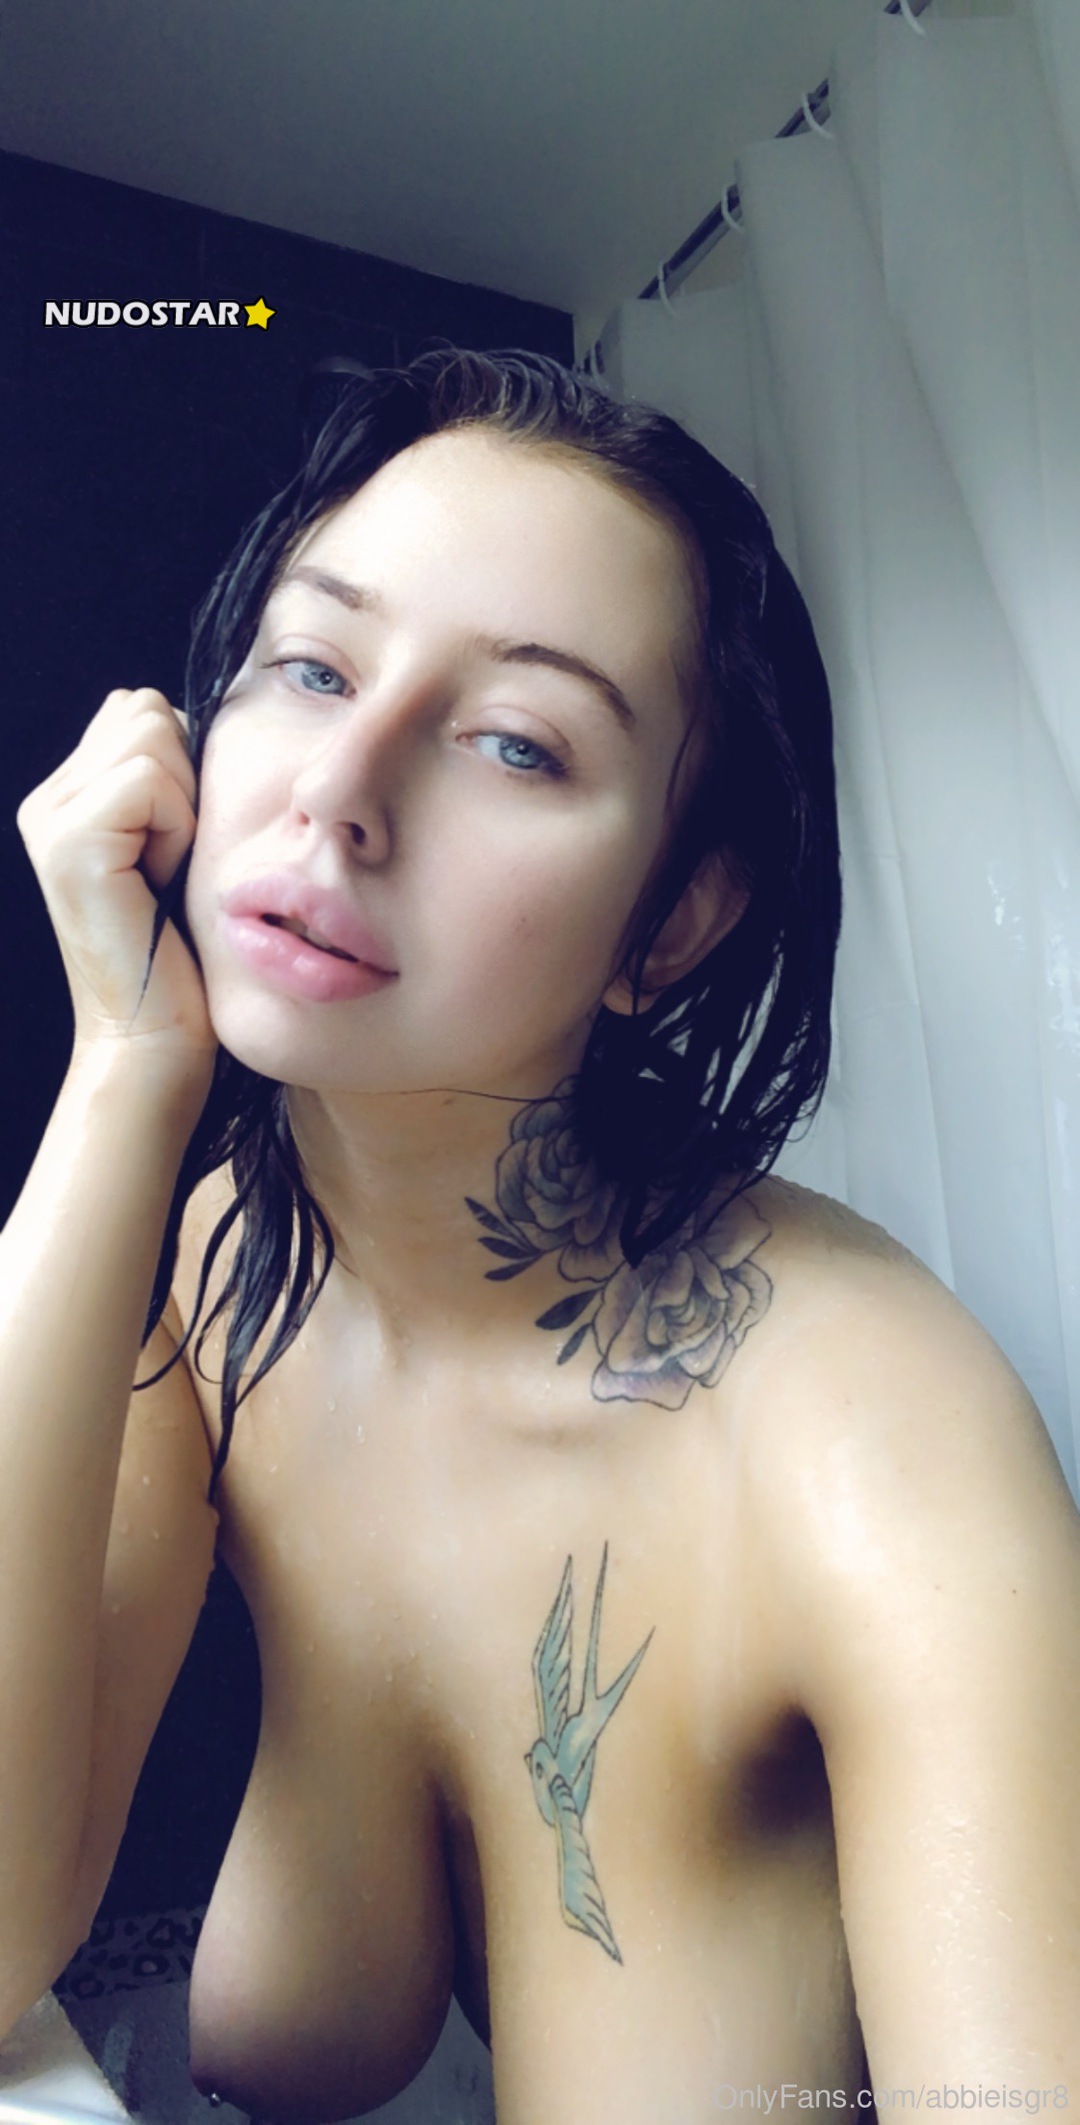 Abbie Mcgann – abbieisgr8 Onlyfans Nudes Leaks (152 photos + 4 videos)